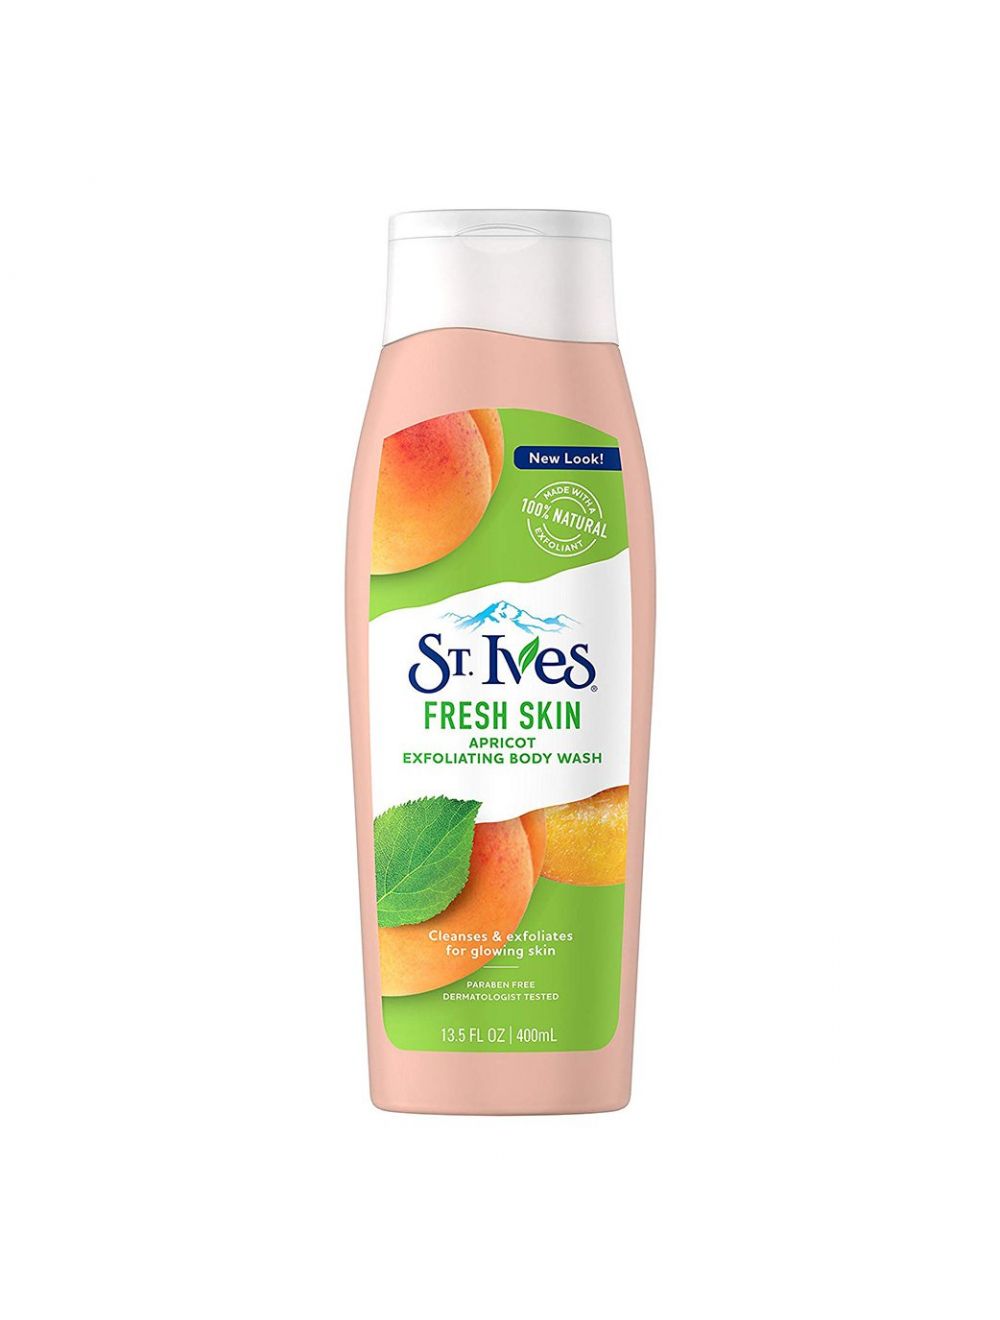 St. Ives Fresh Skin Apricot Exfoliating Body Wash (400ml)